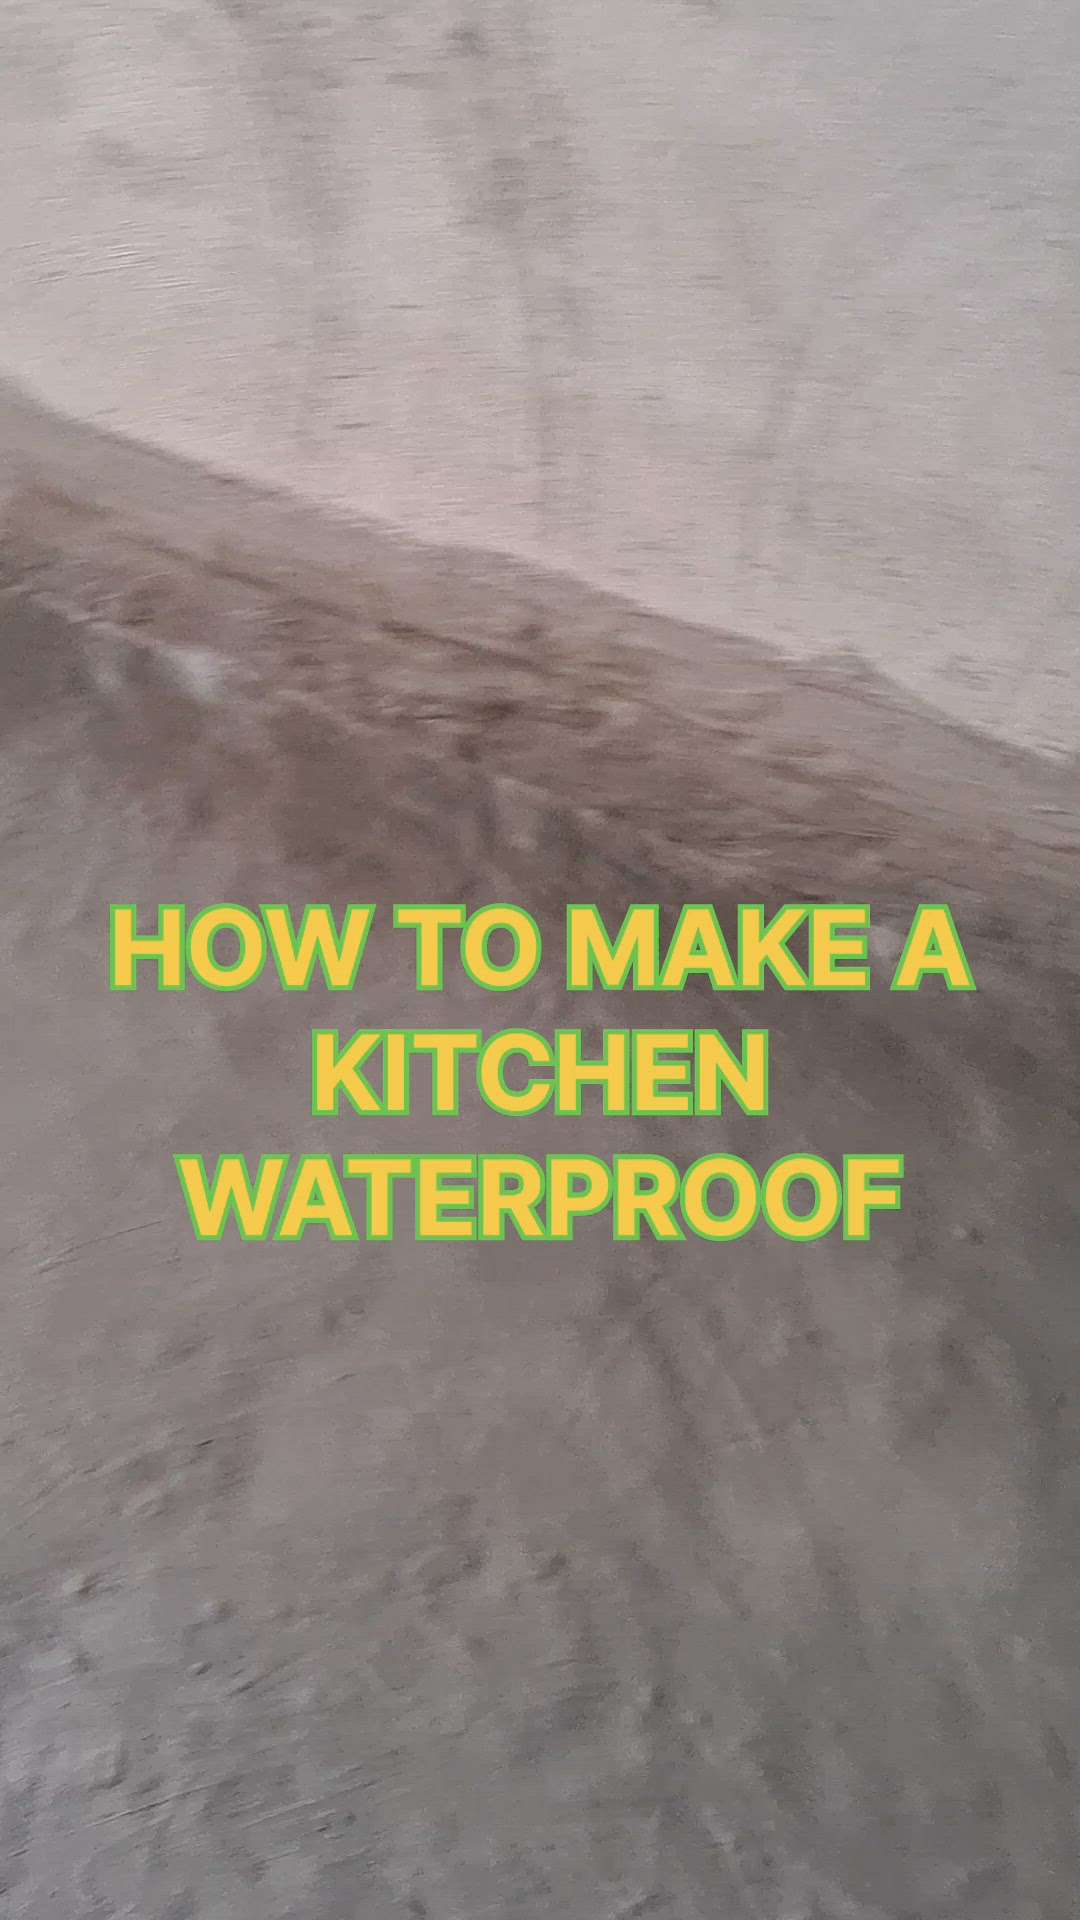 #Waterproofingkitchen #kitchenwaterproofing #BathroomRenovation #kitchenrenovation #kitchenRepair #KitchenDesigns